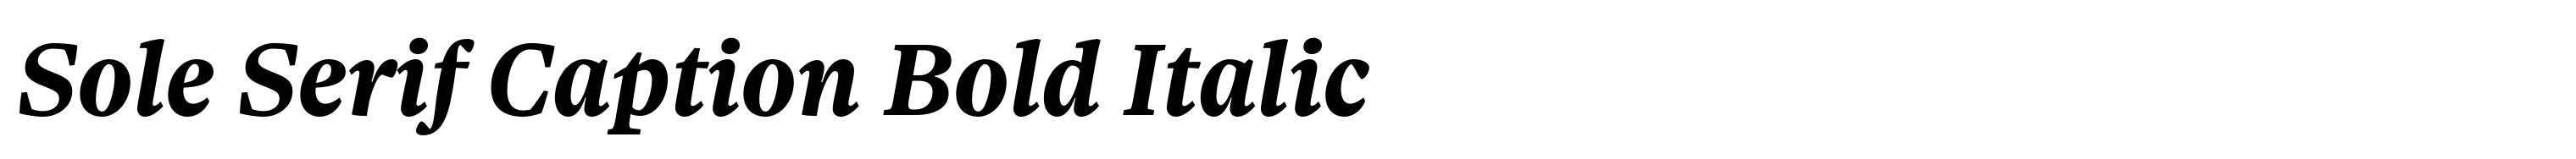 Sole Serif Caption Bold Italic